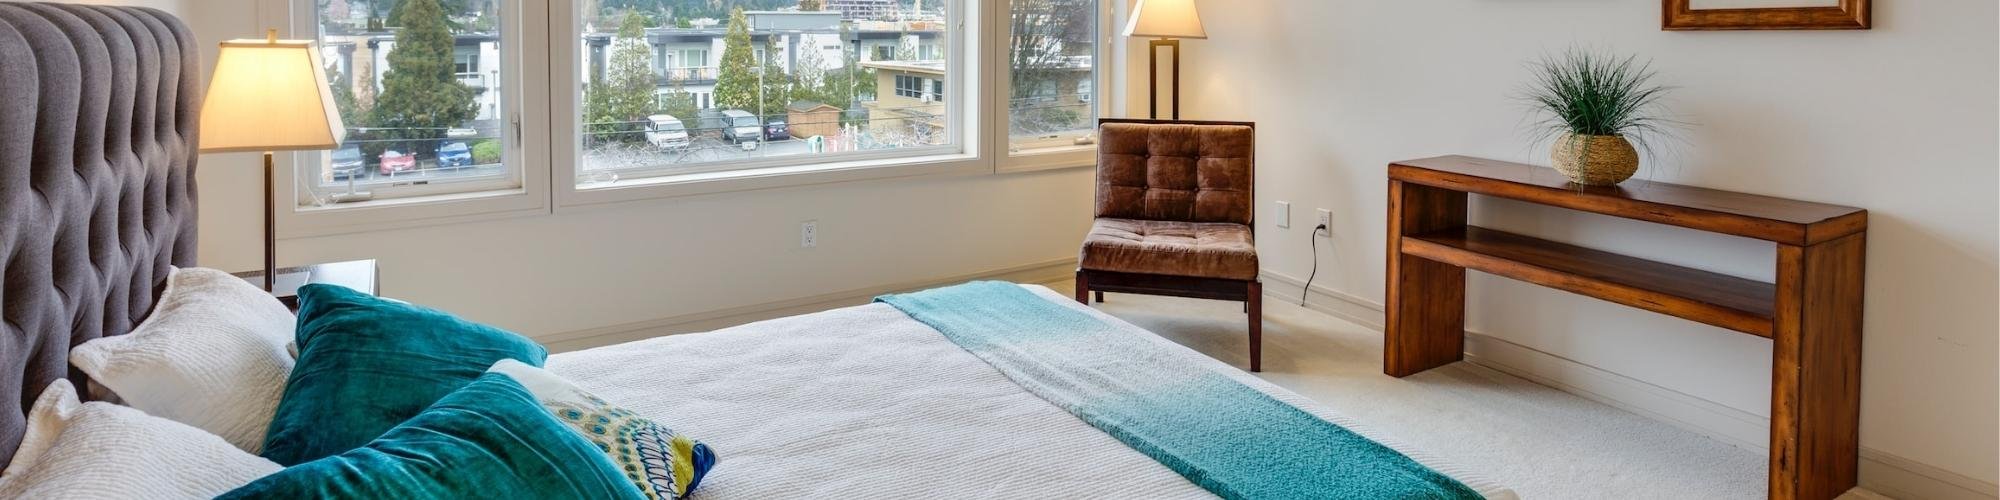 Carpet flooring in a bedroom in Rapid City, SD area. Altimate Flooring